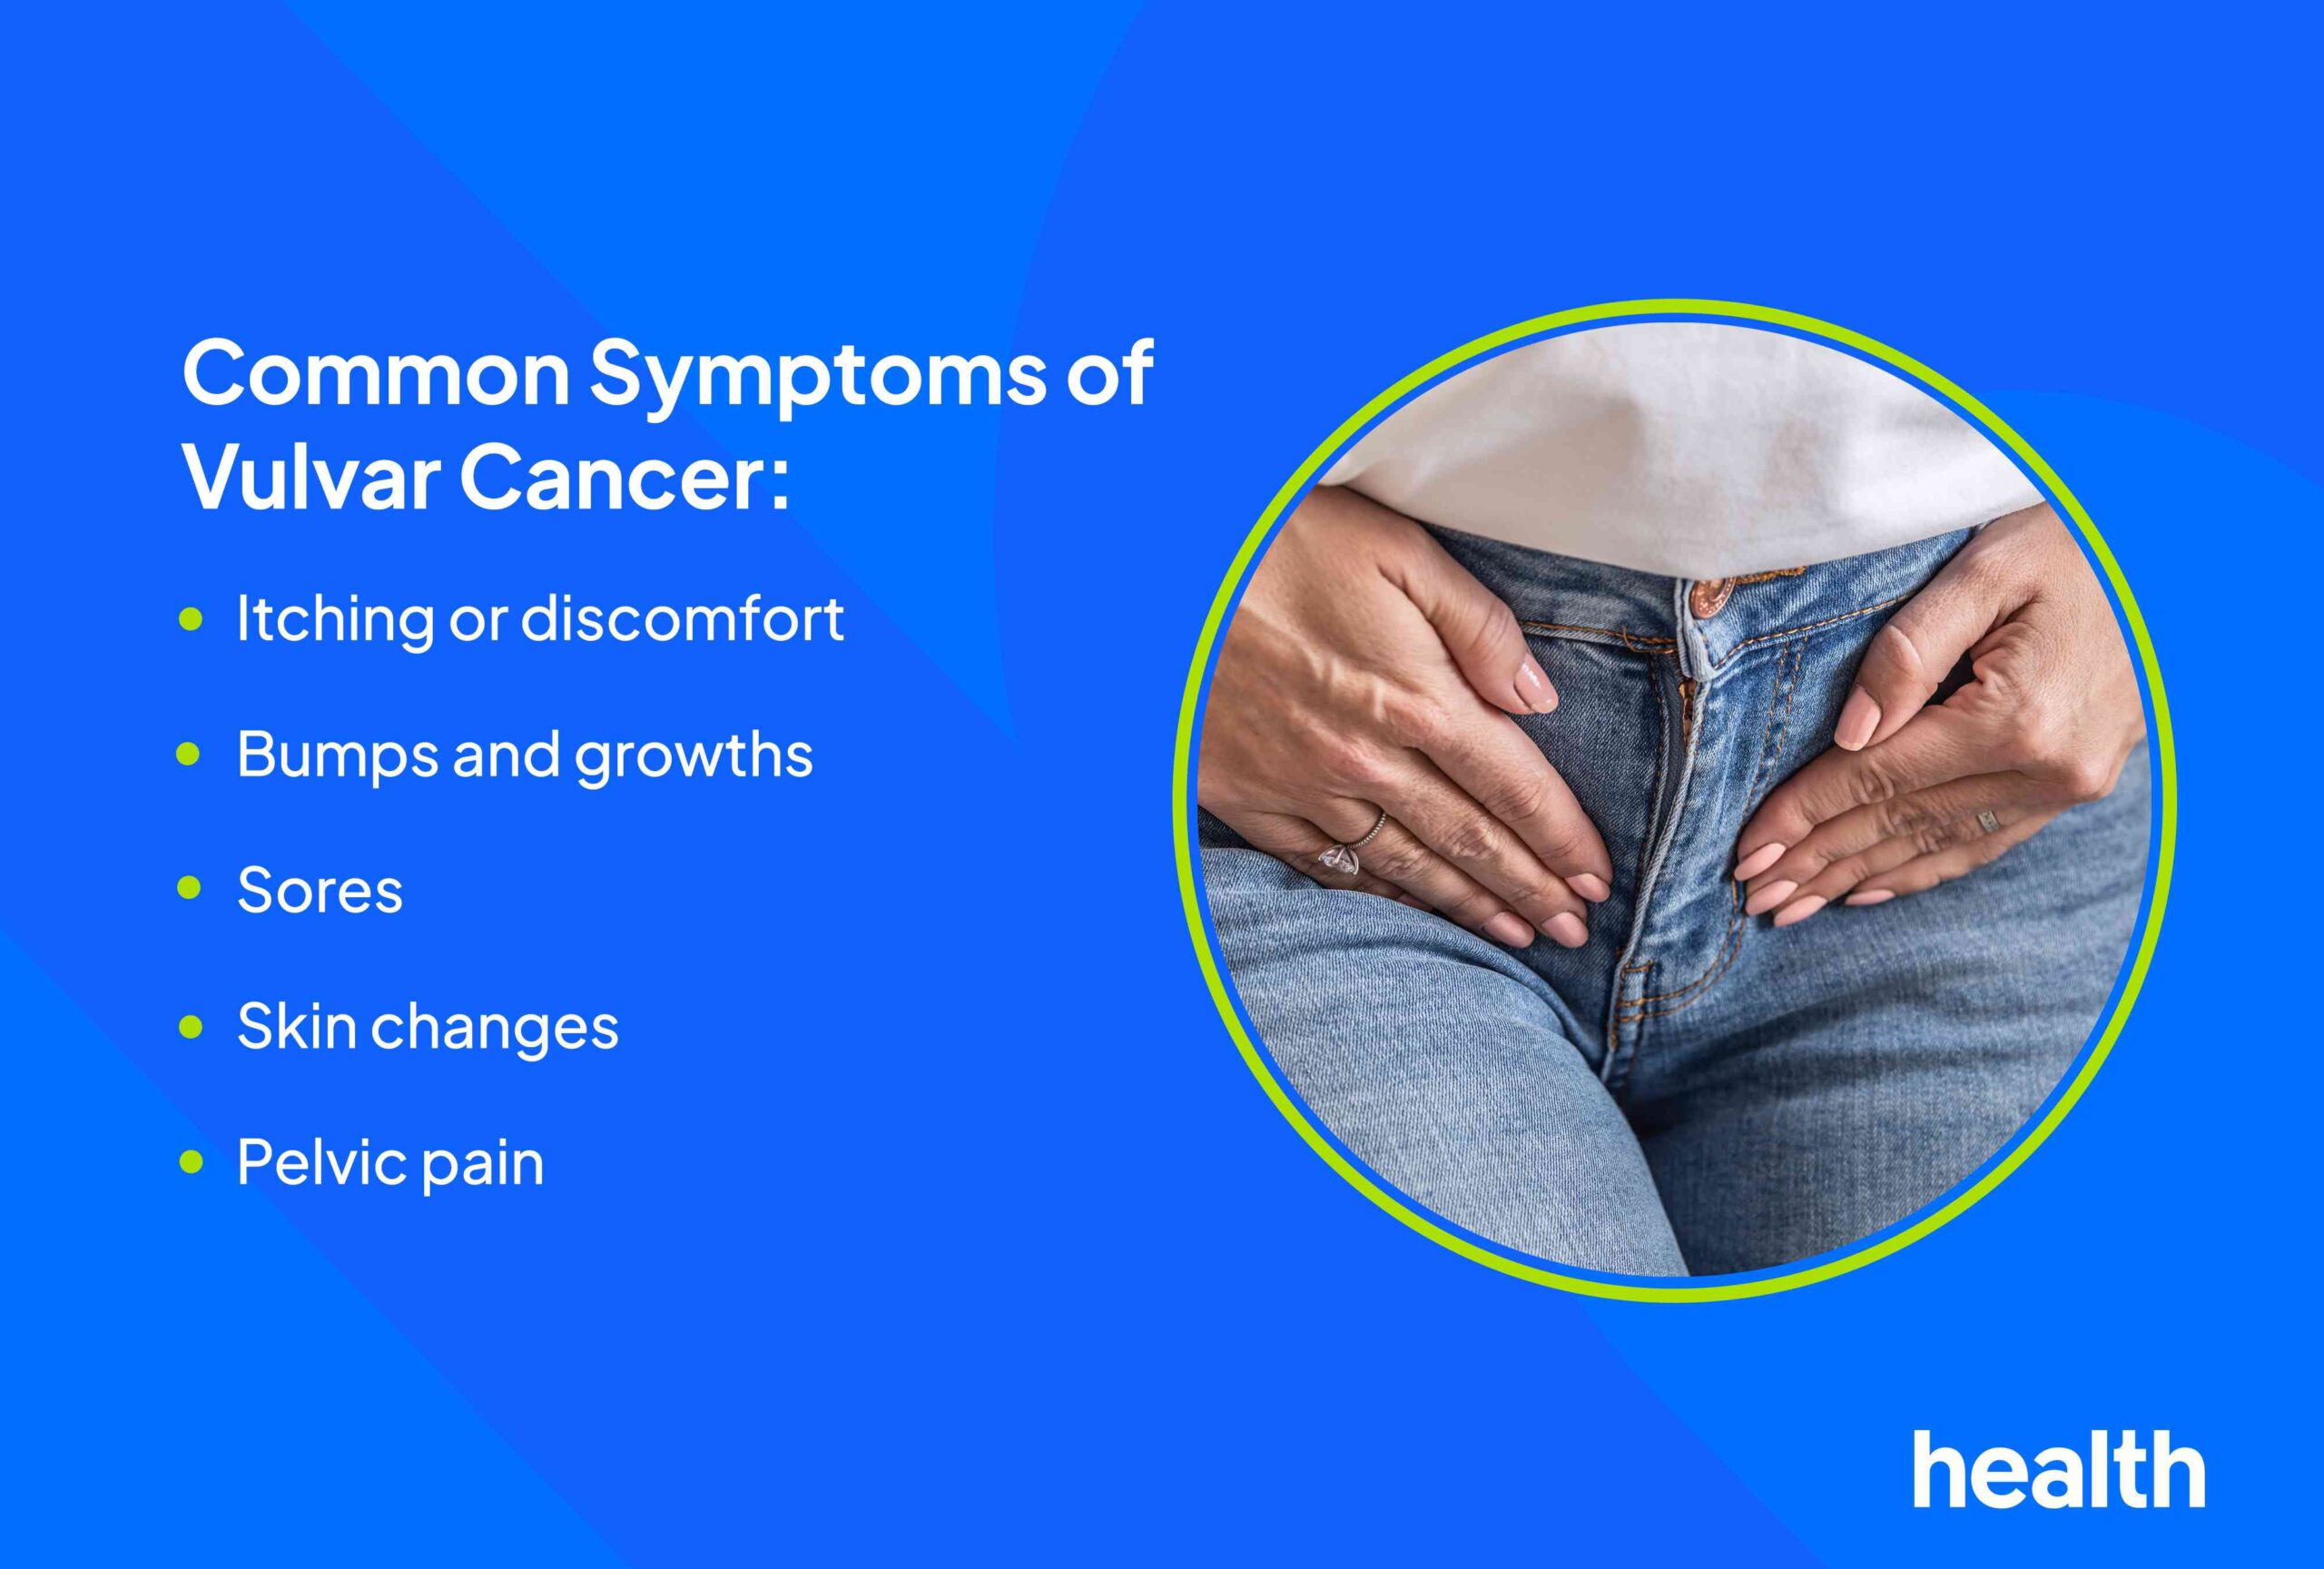 Vulvar Cancer: Signs and Symptoms